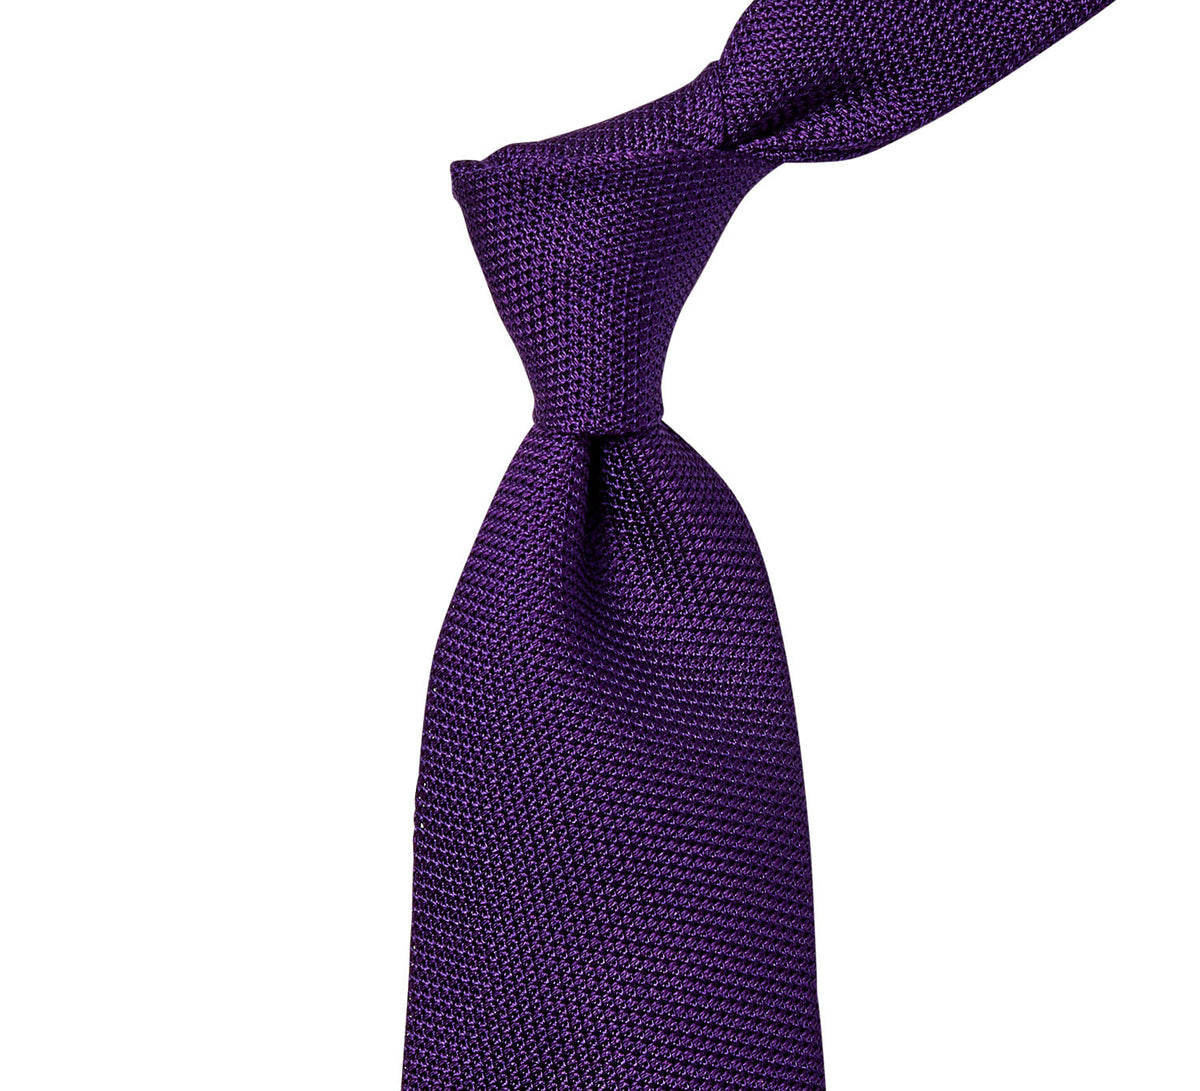 A Sovereign Grade Grenadine Fina Purple Tie handmade in the United Kingdom, showcasing highest quality craftsmanship from KirbyAllison.com.